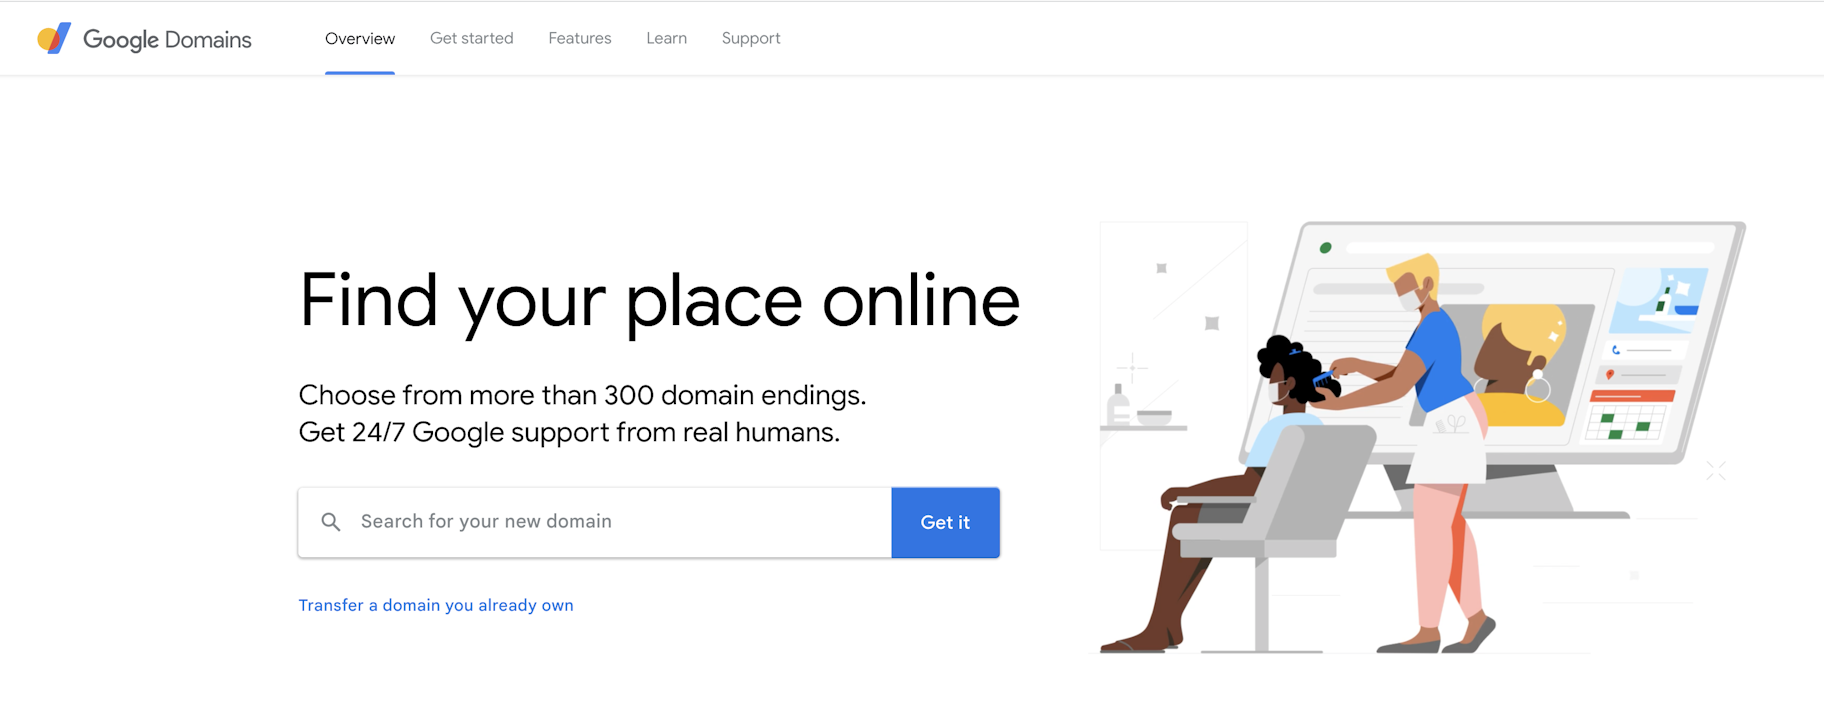 Google's domain service